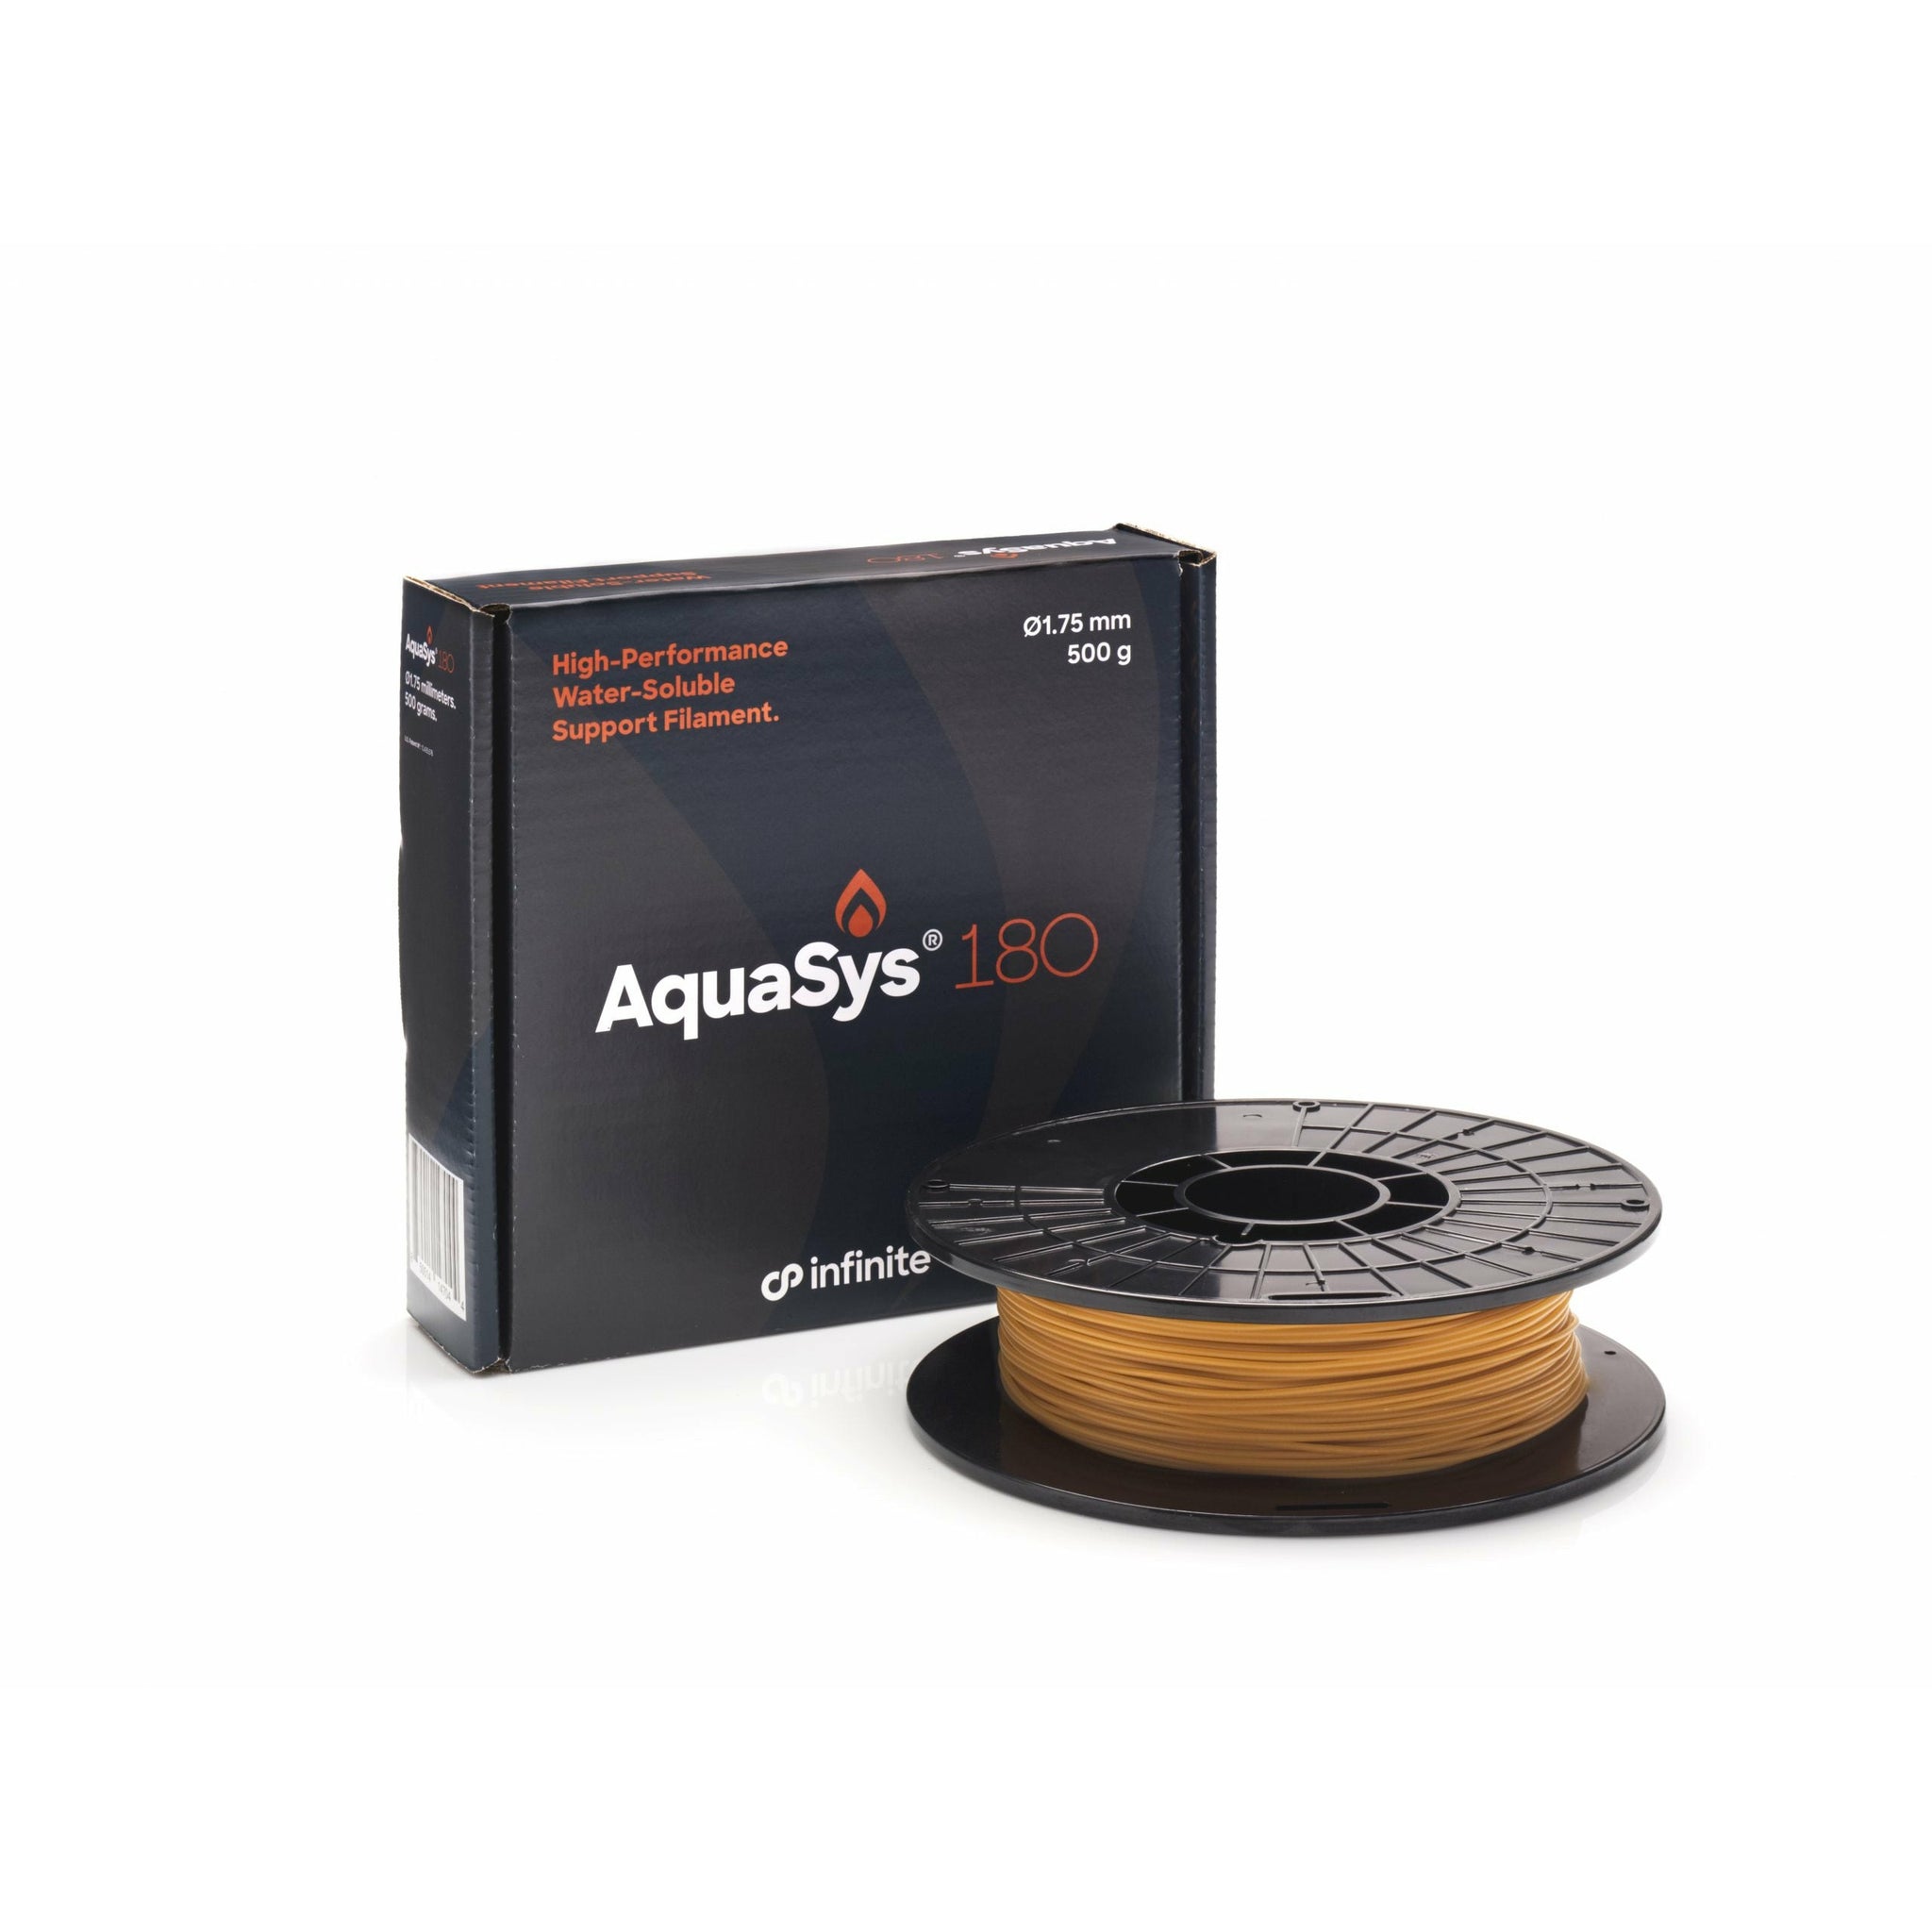 AquaSys 180 Filament Infinite Material Solutions 1.75mm 500g Natural - Indicate Technologies